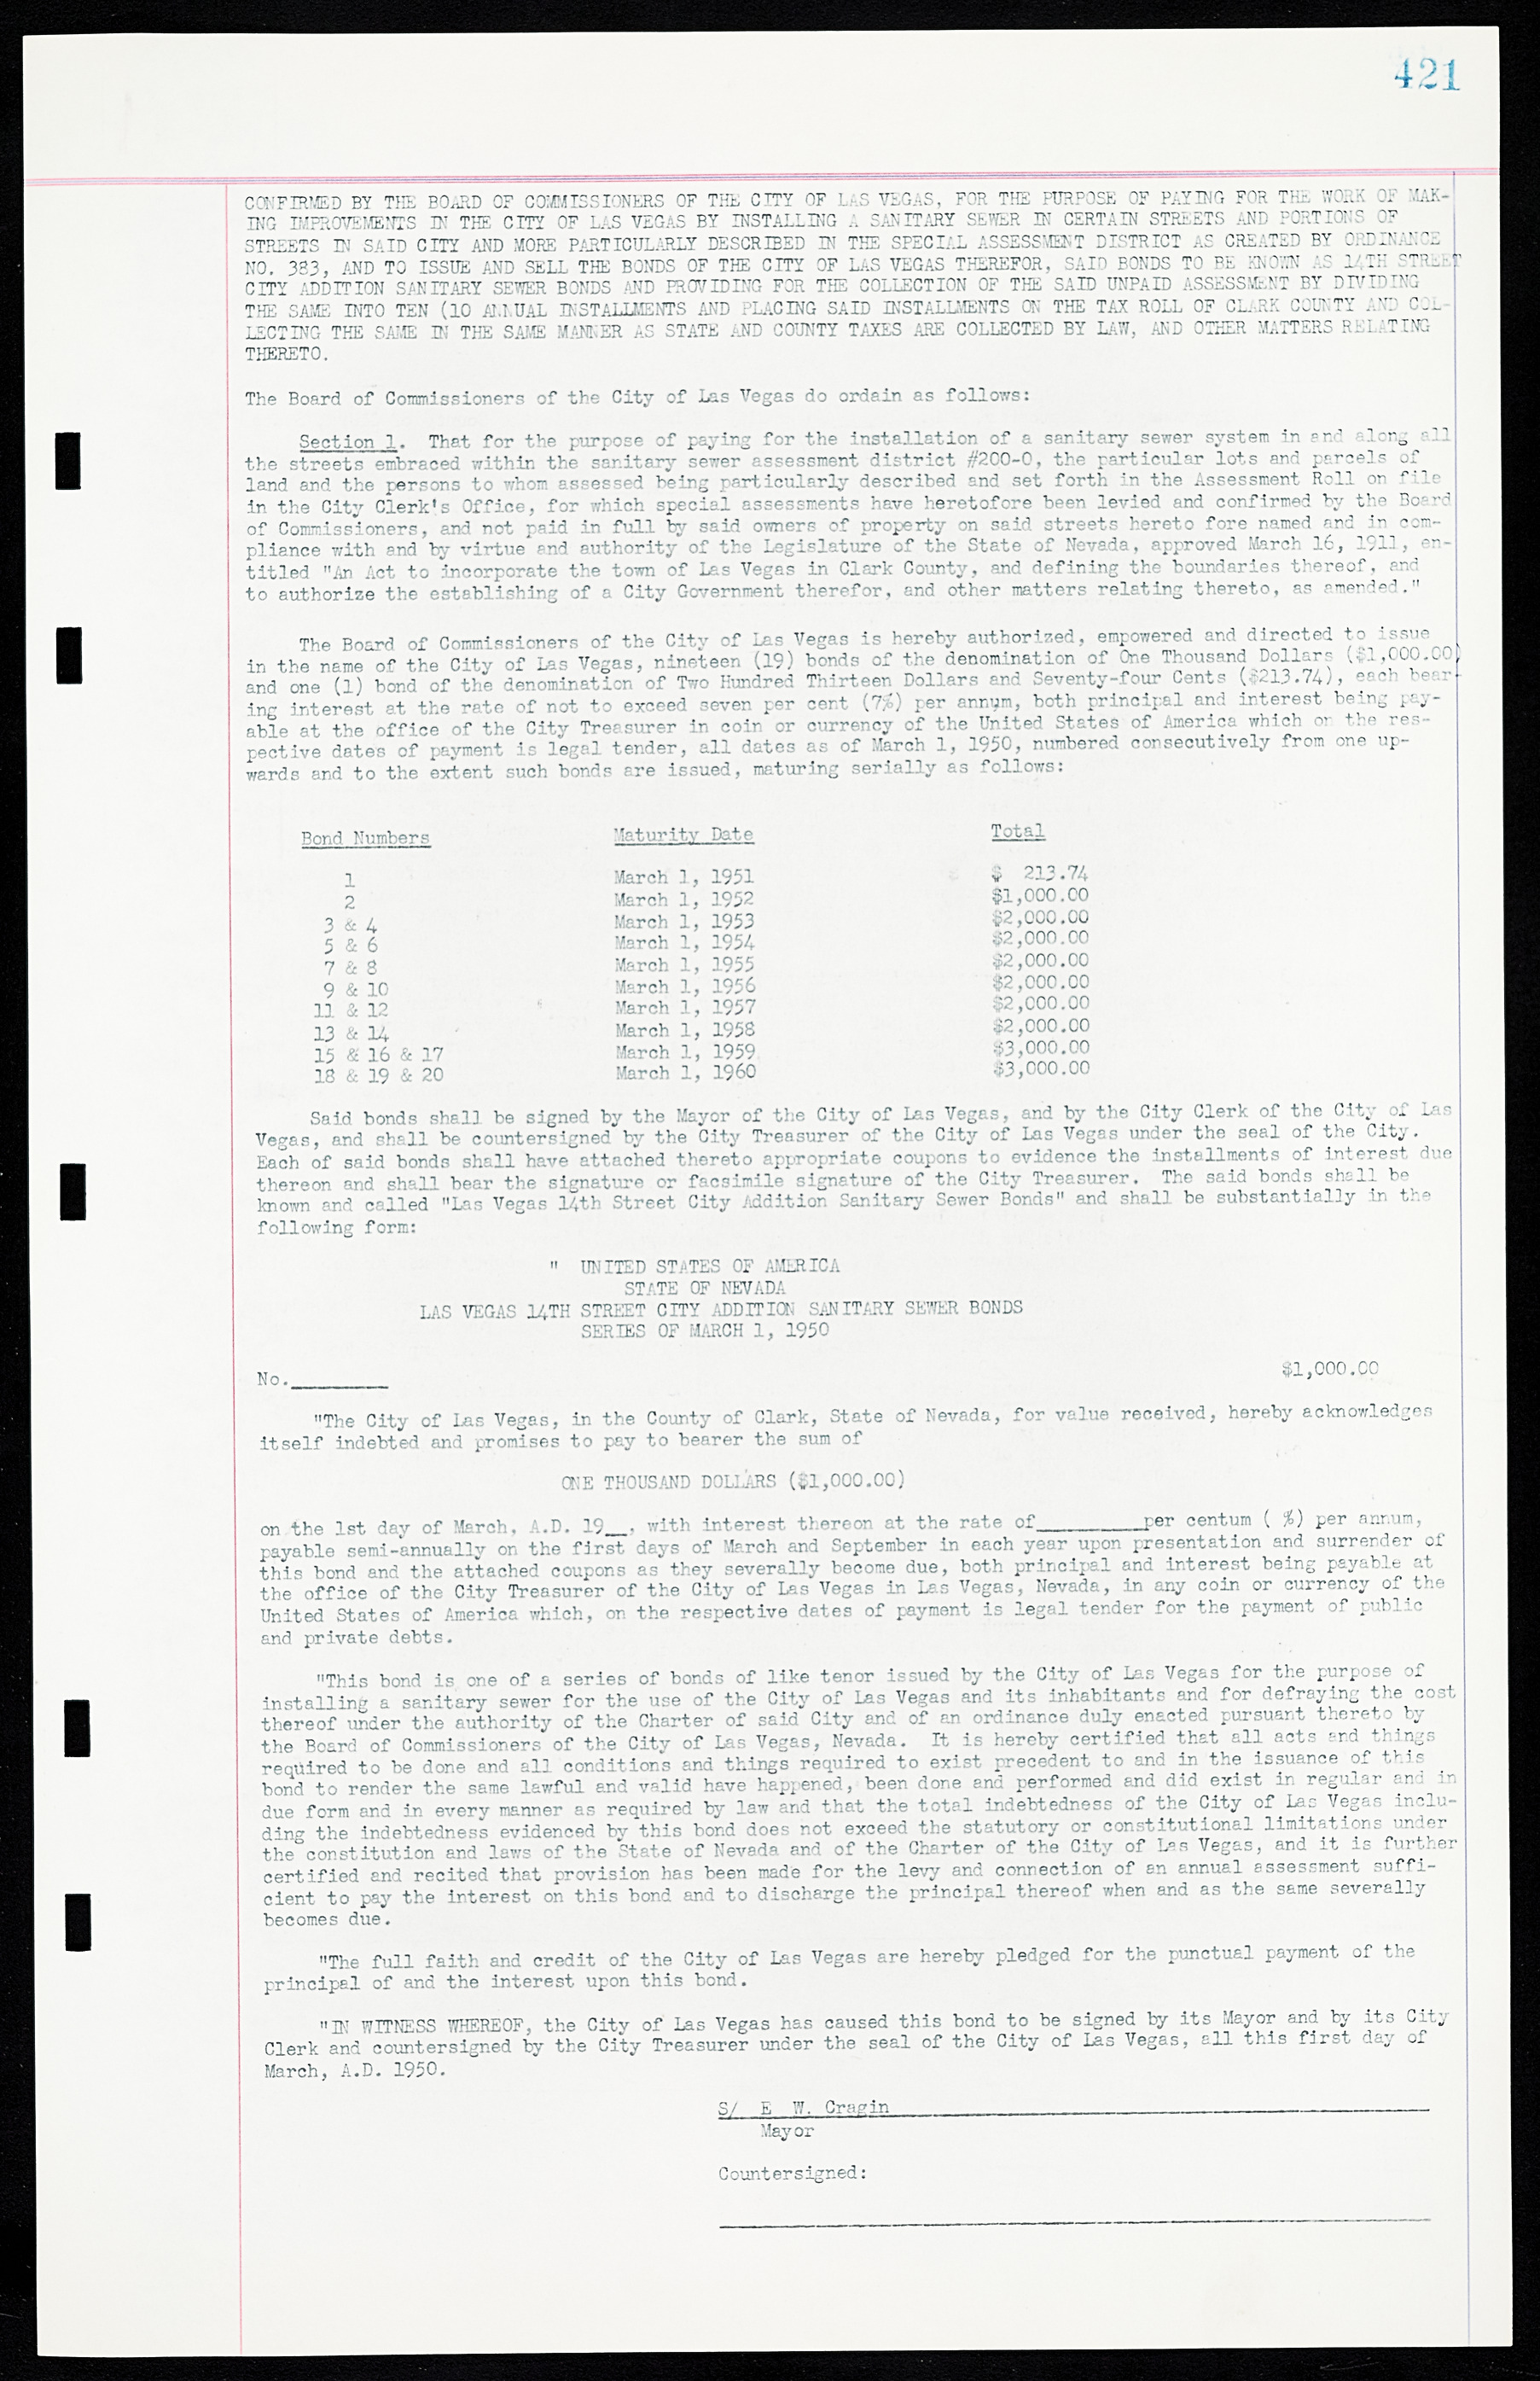 Las Vegas City Ordinances, March 31, 1933 to October 25, 1950, lvc000014-456